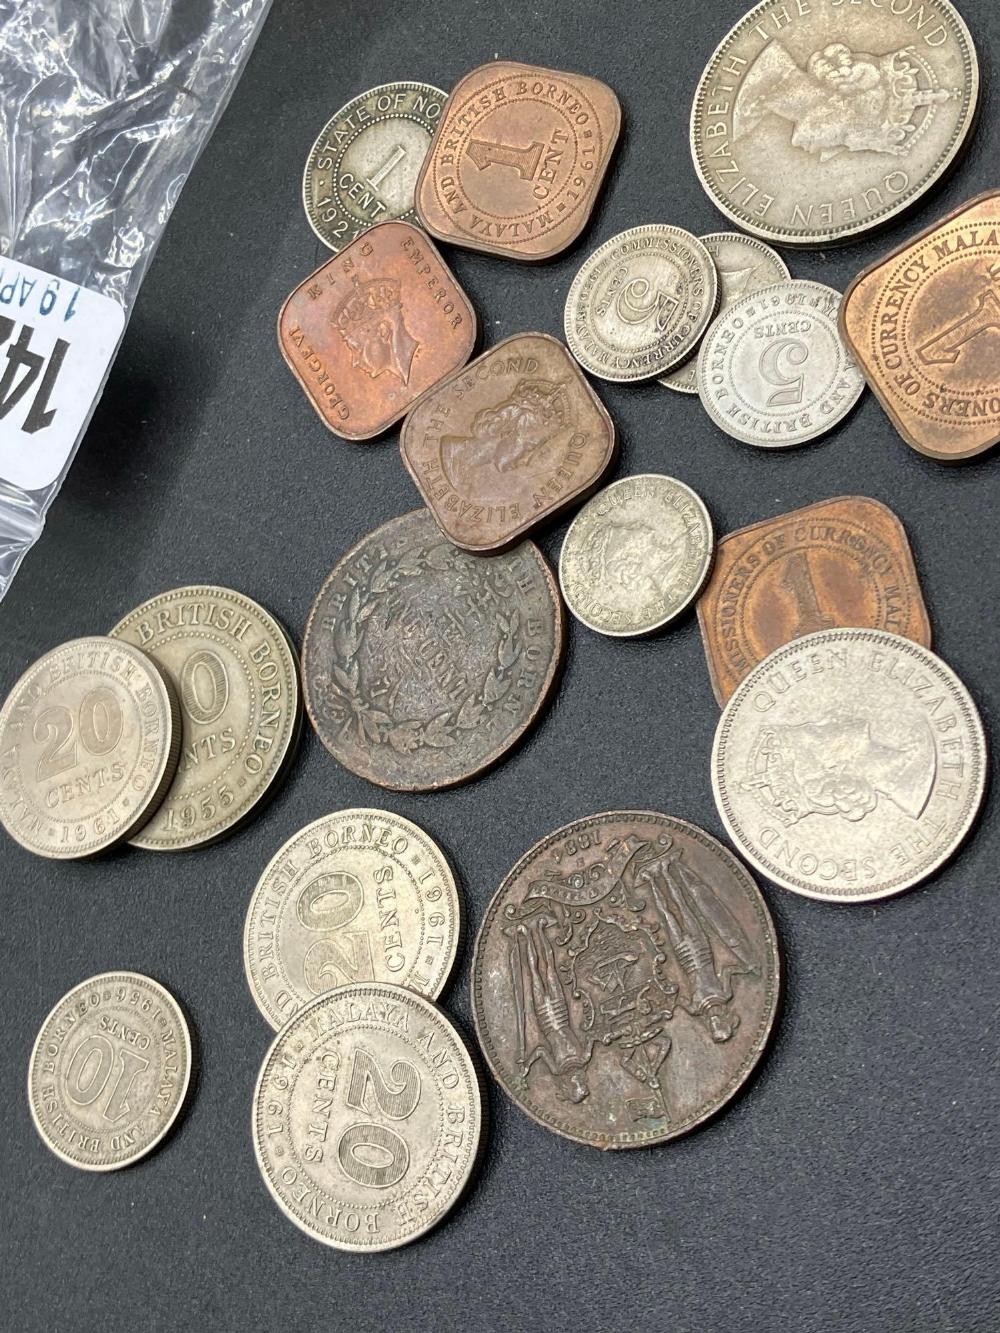 Borneo coins - Image 2 of 2